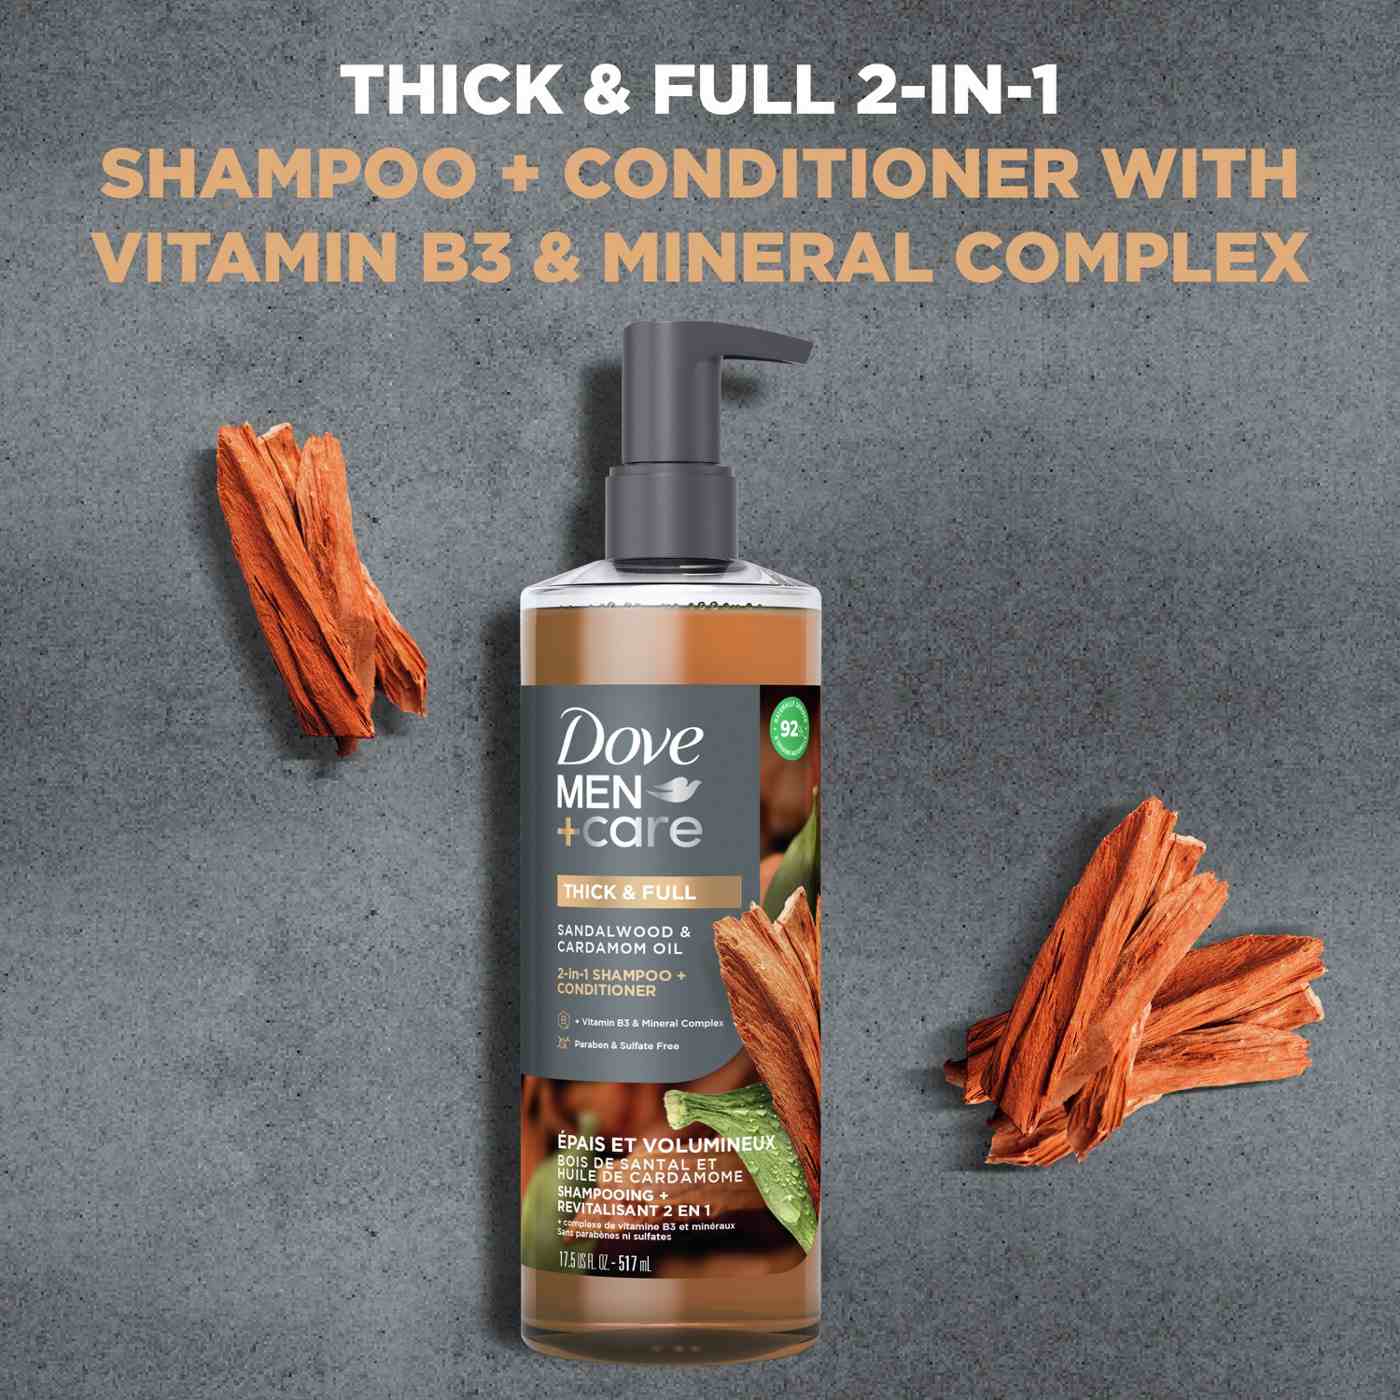 Dove Men+Care Thick & Full 2 in 1 Shampoo + Conditioner - Sandalwood & Cardamom Oil; image 3 of 5